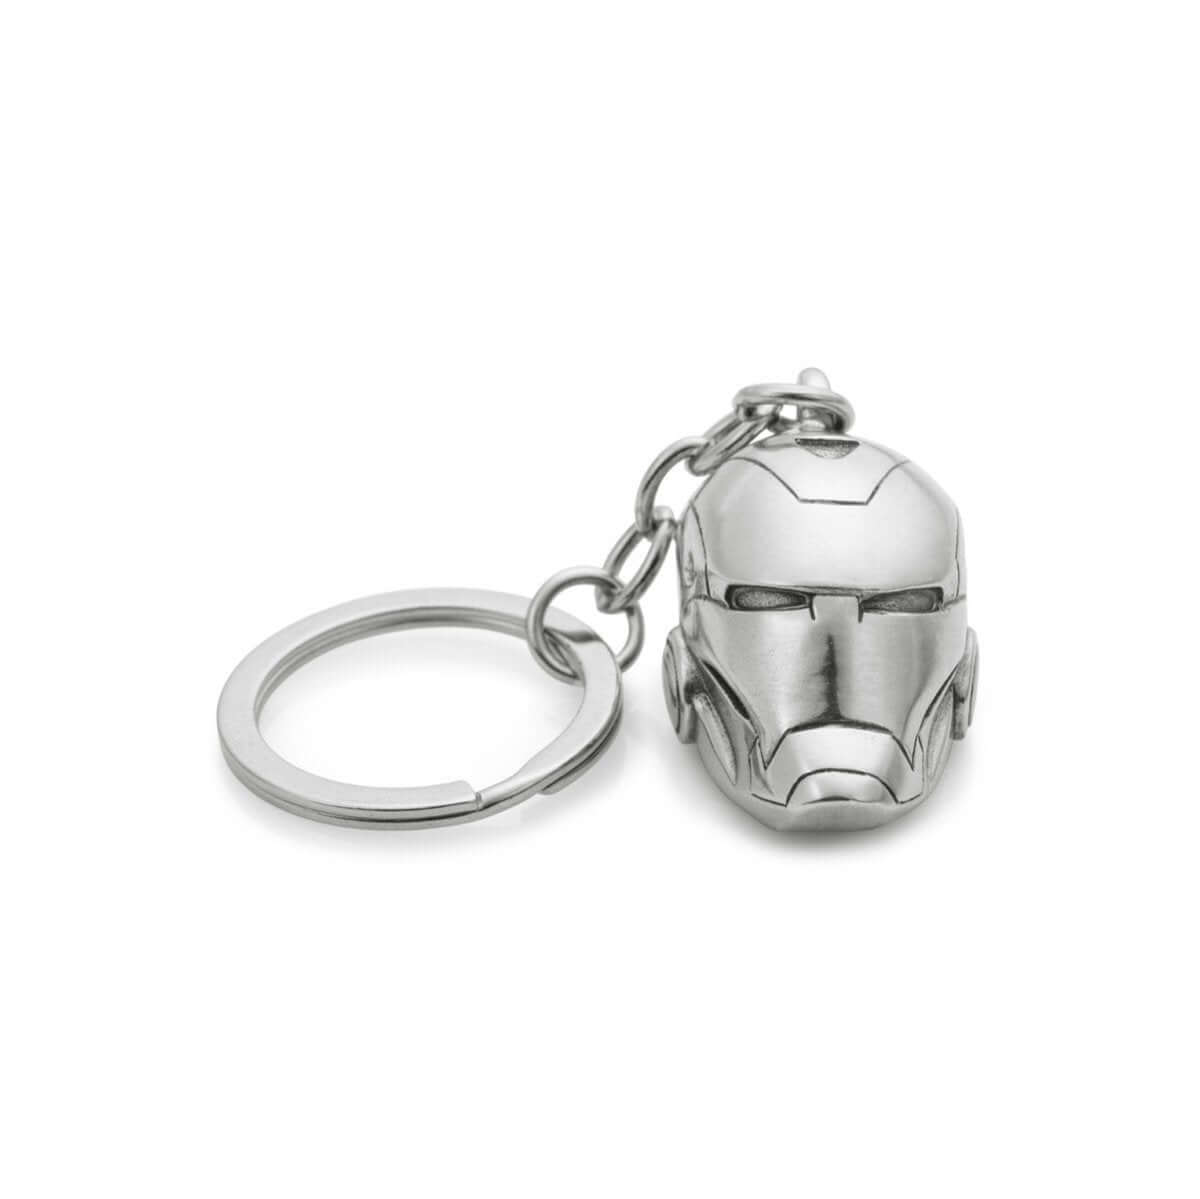 Iron Man Keychain - Marvel Collectible gift